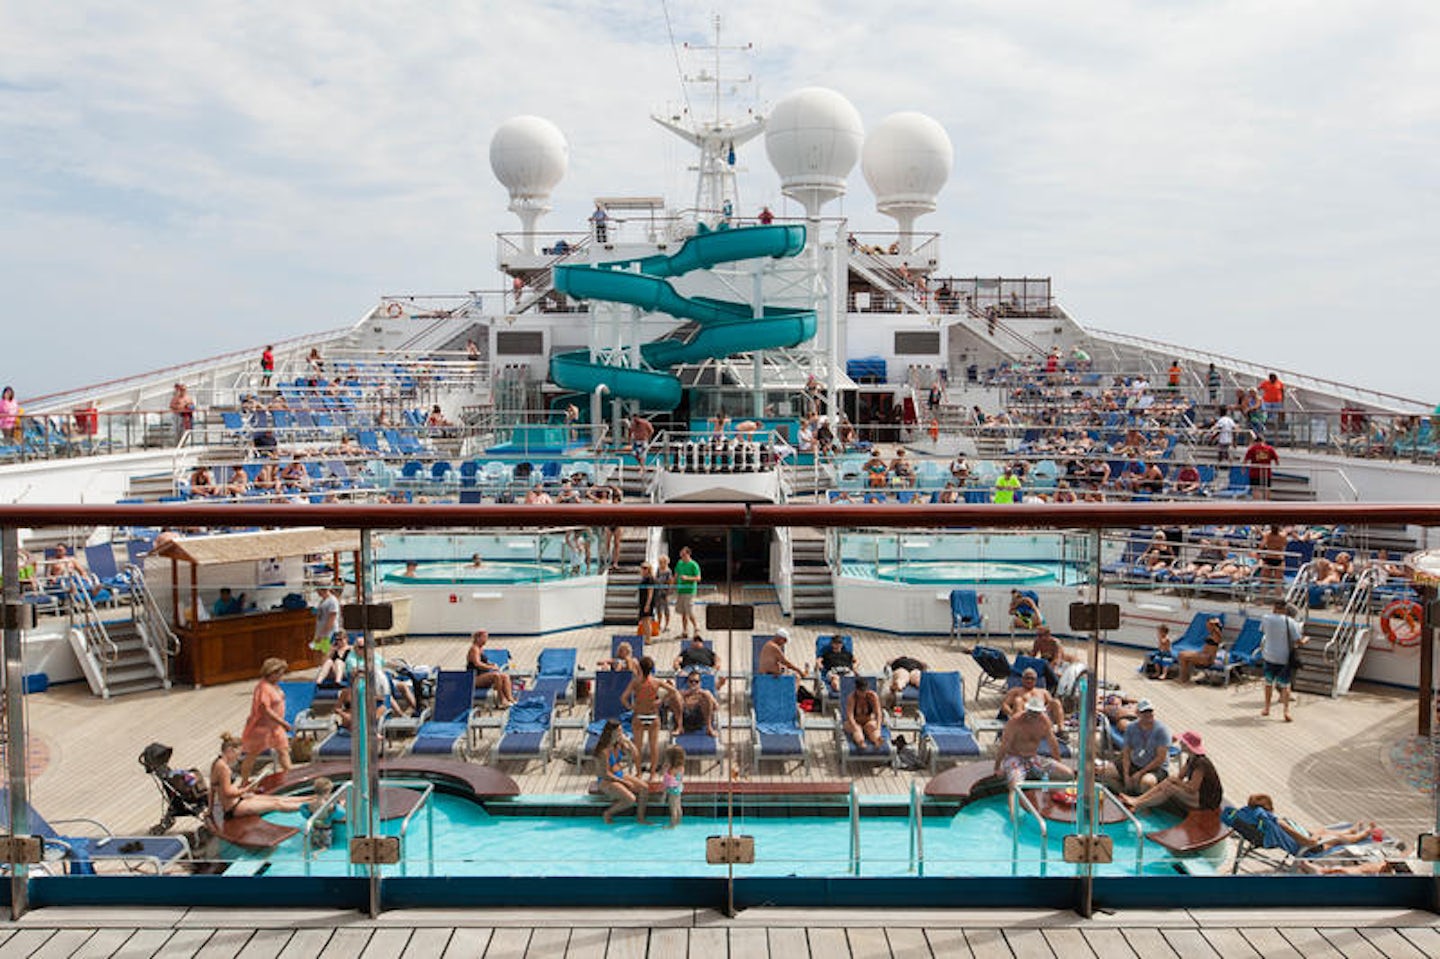 Pool on Carnival Glory Cruise Ship Cruise Critic